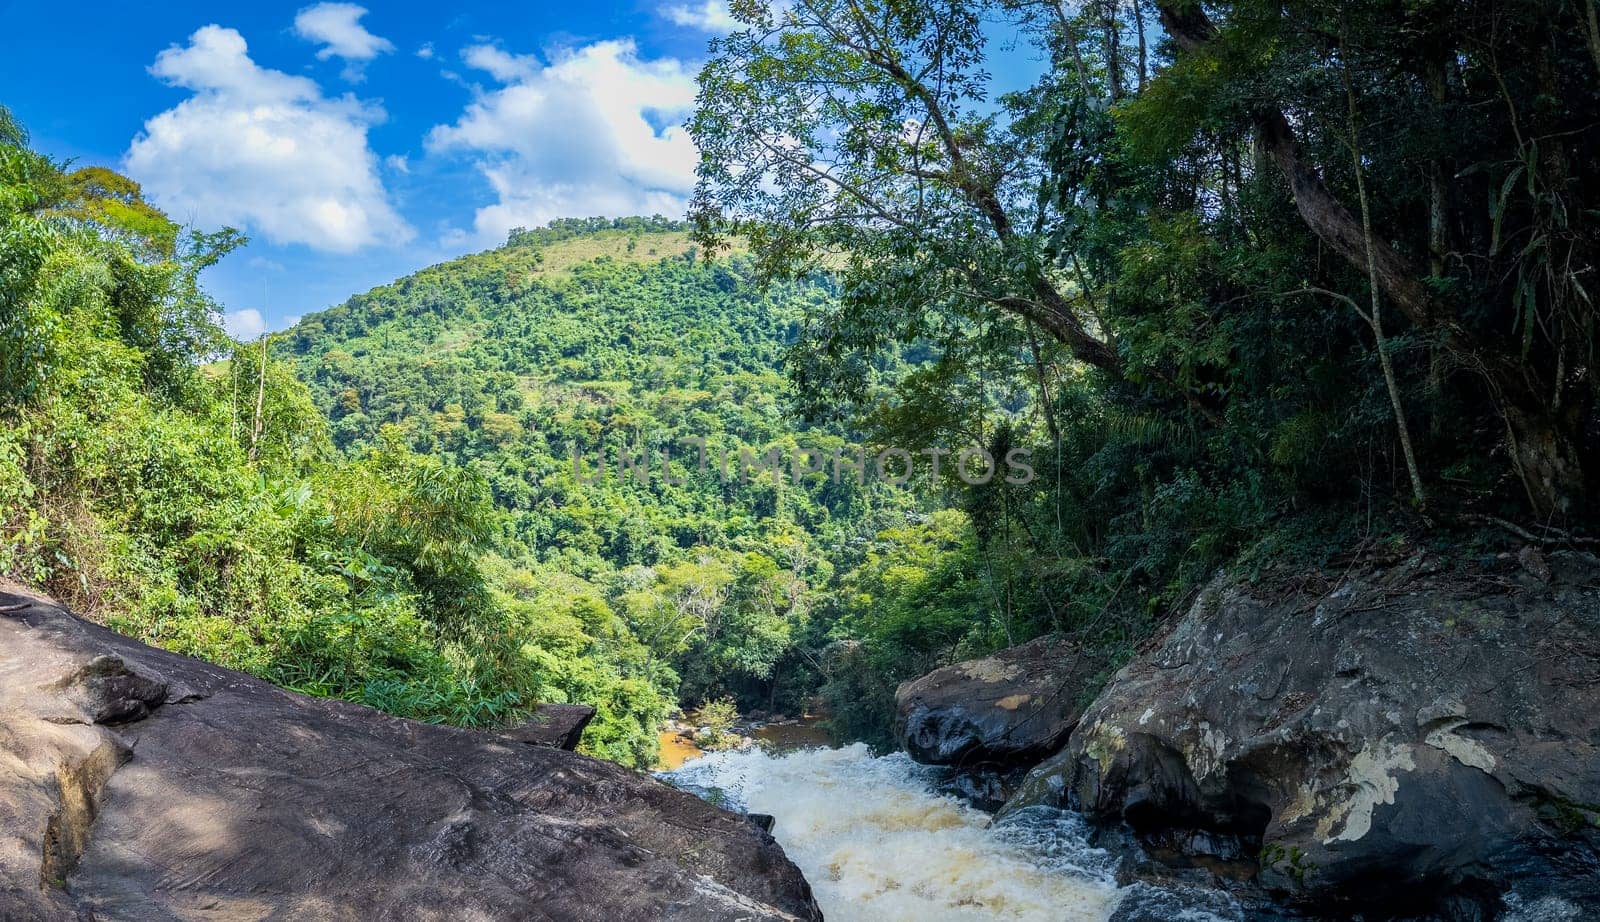 Lush Greenery Surrounding a Wild River in the Jungle by FerradalFCG